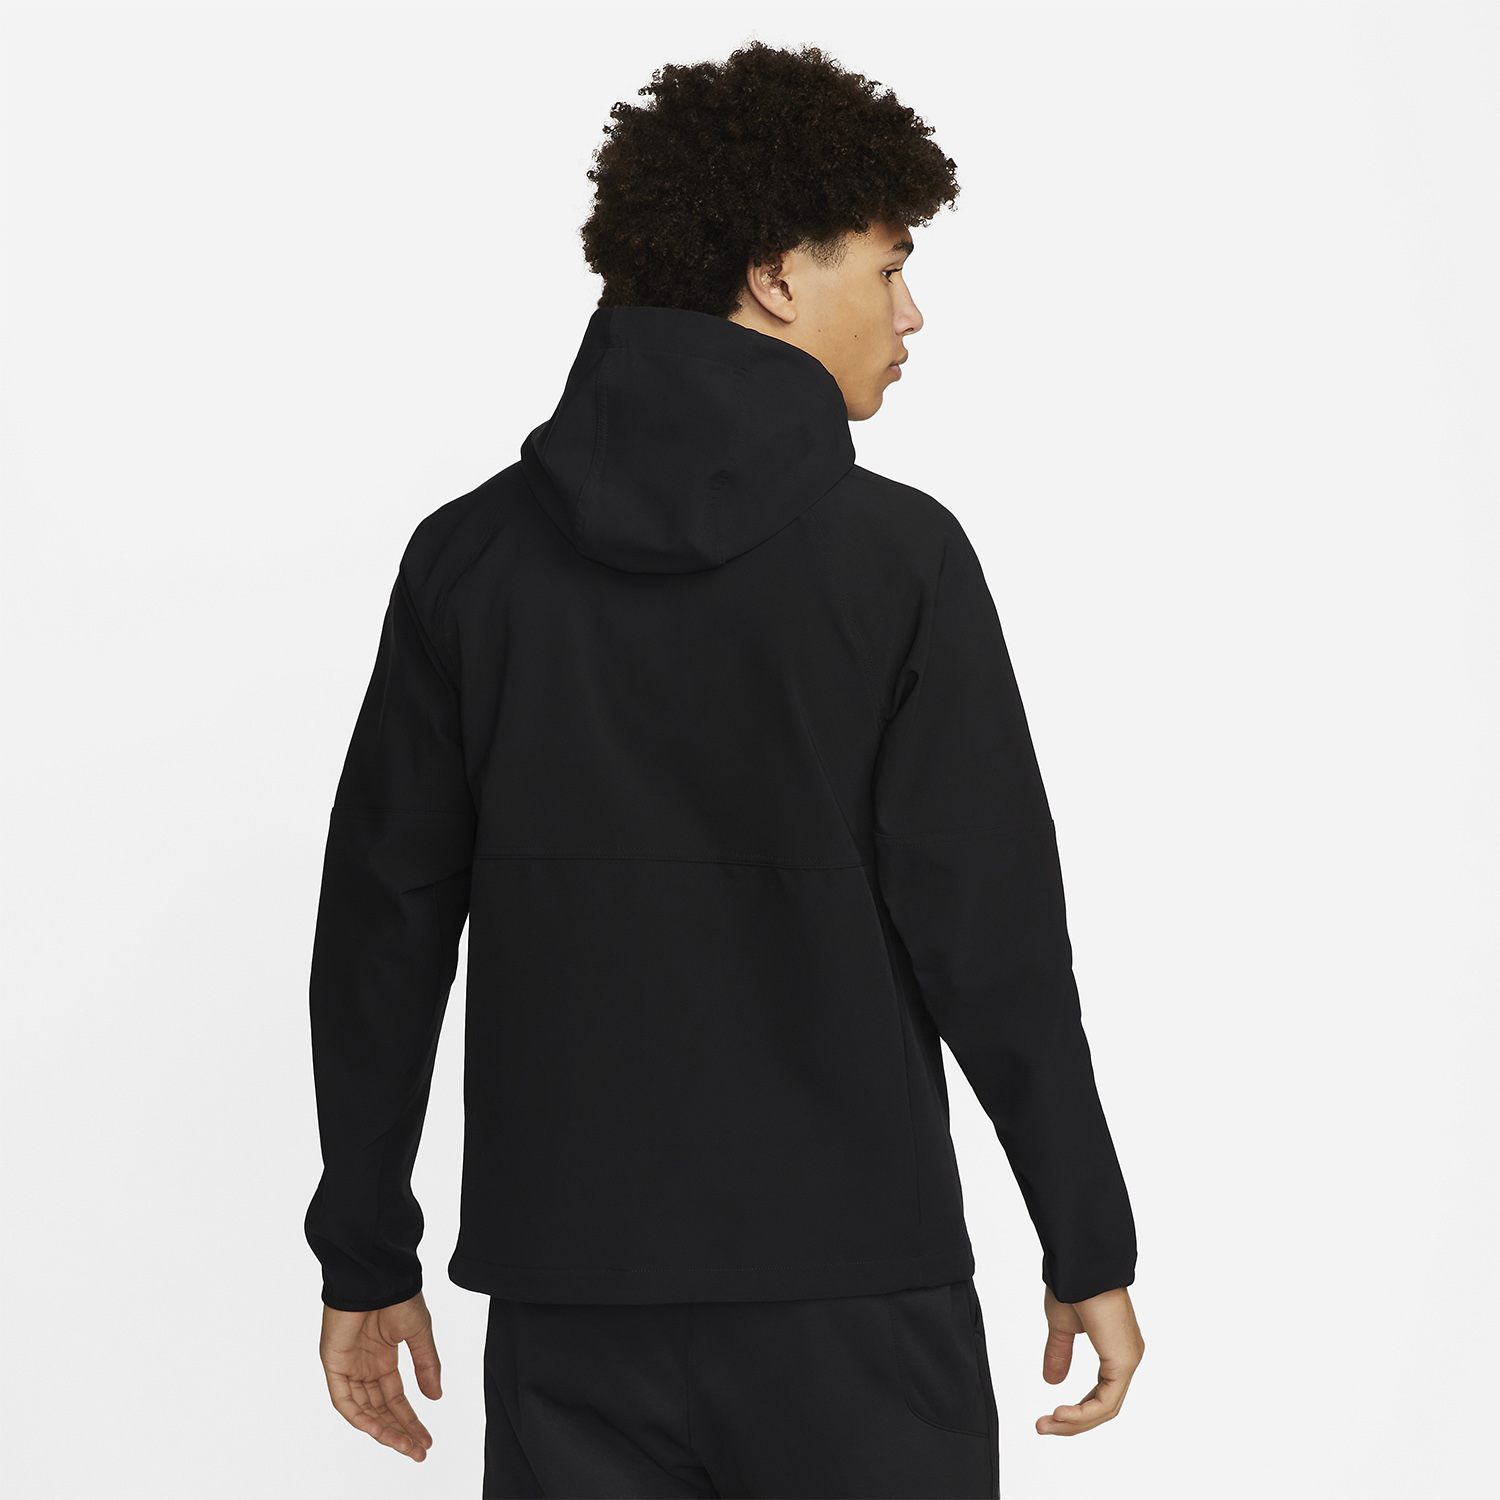 Nike Flex Vent Max Men's Training Jacket - Black/White